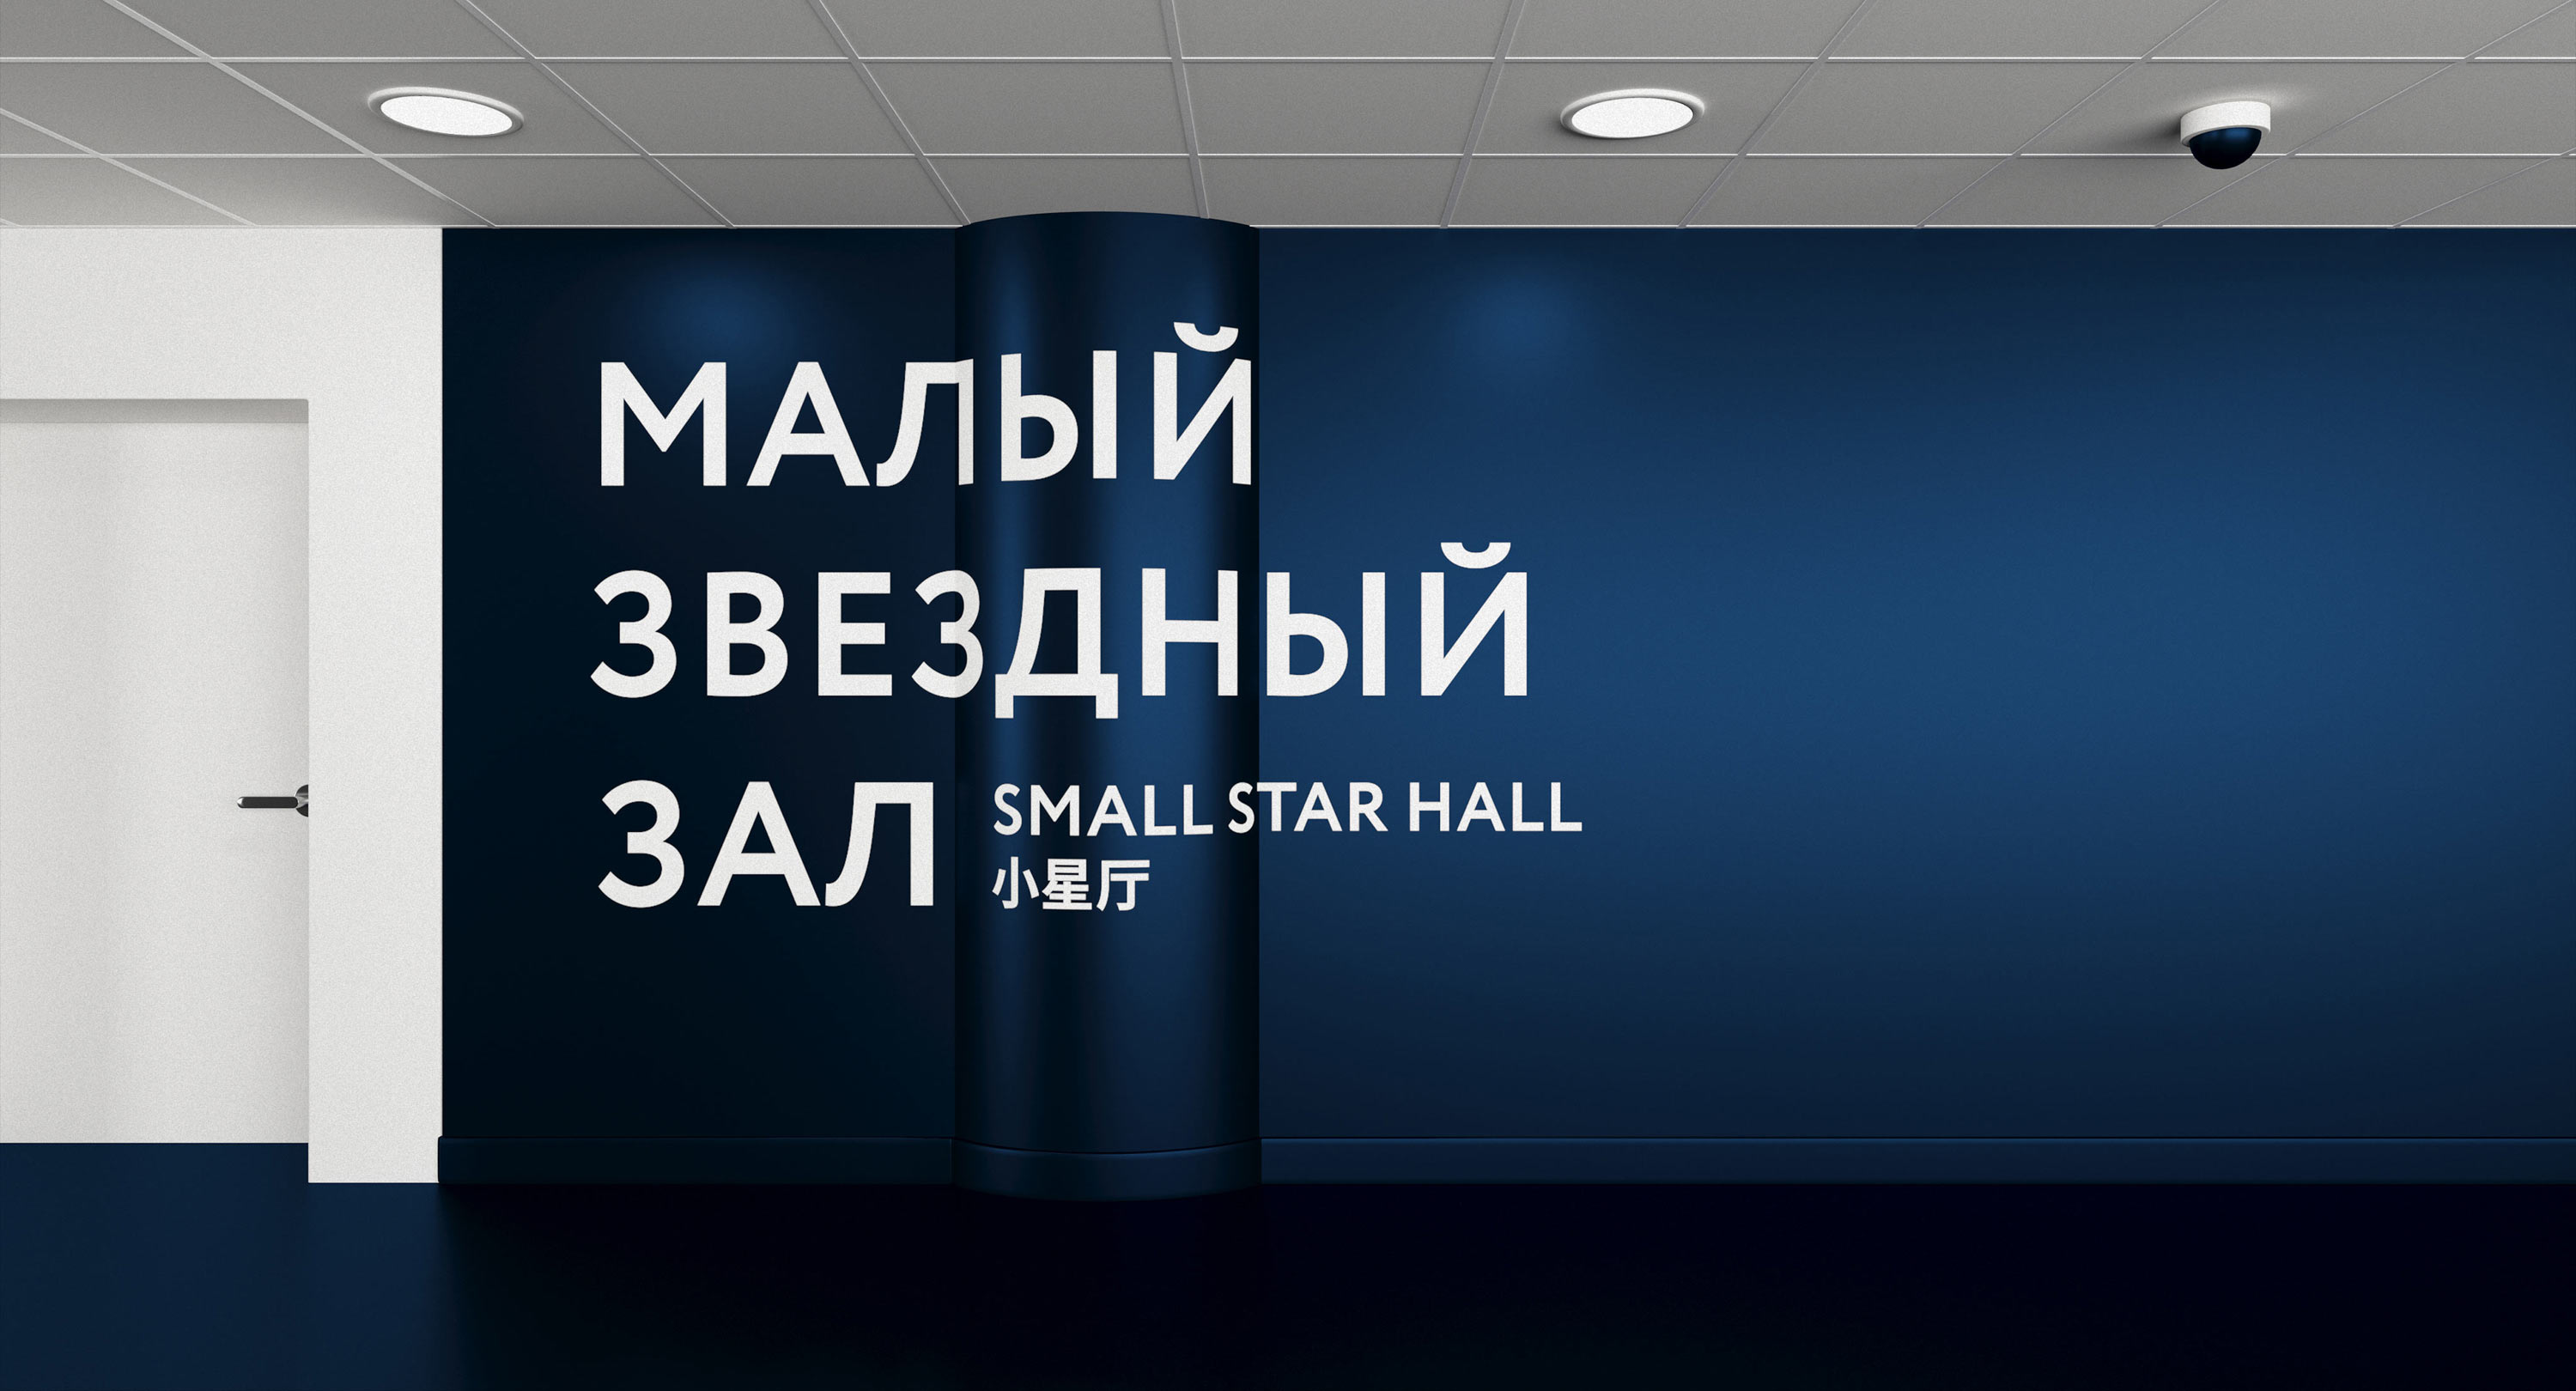 moscow planetarium small star hall